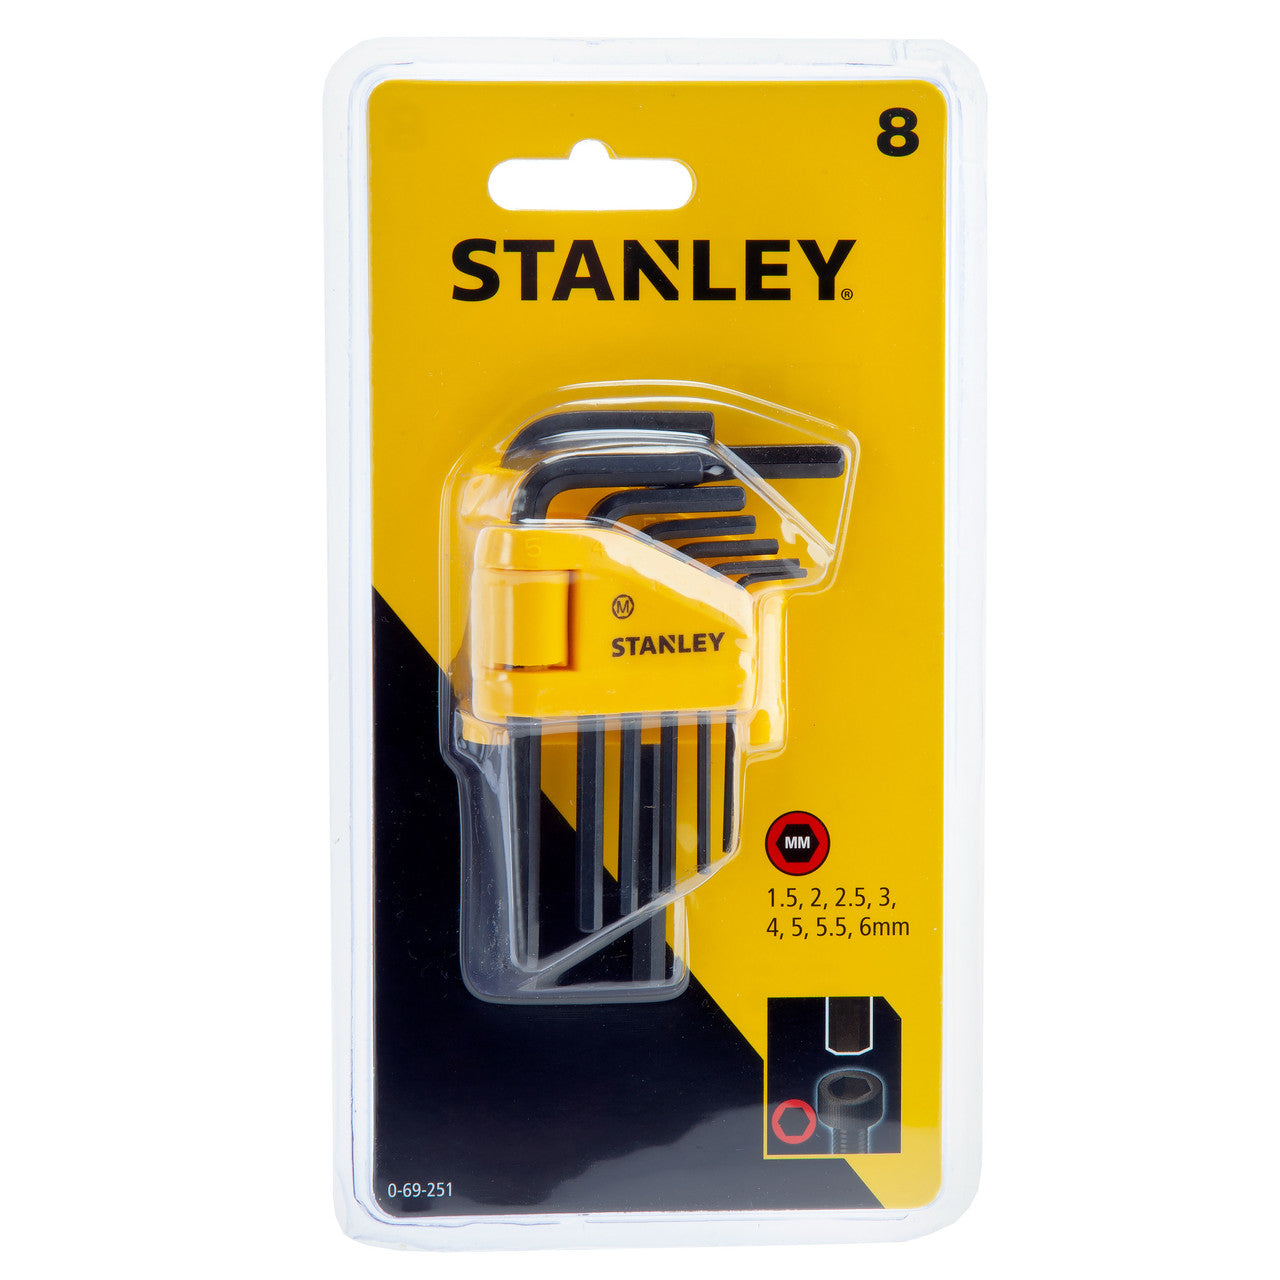 Stanley 0-69-251 Metric Hex Key Set 8 Piece (1.5 - 6mm)